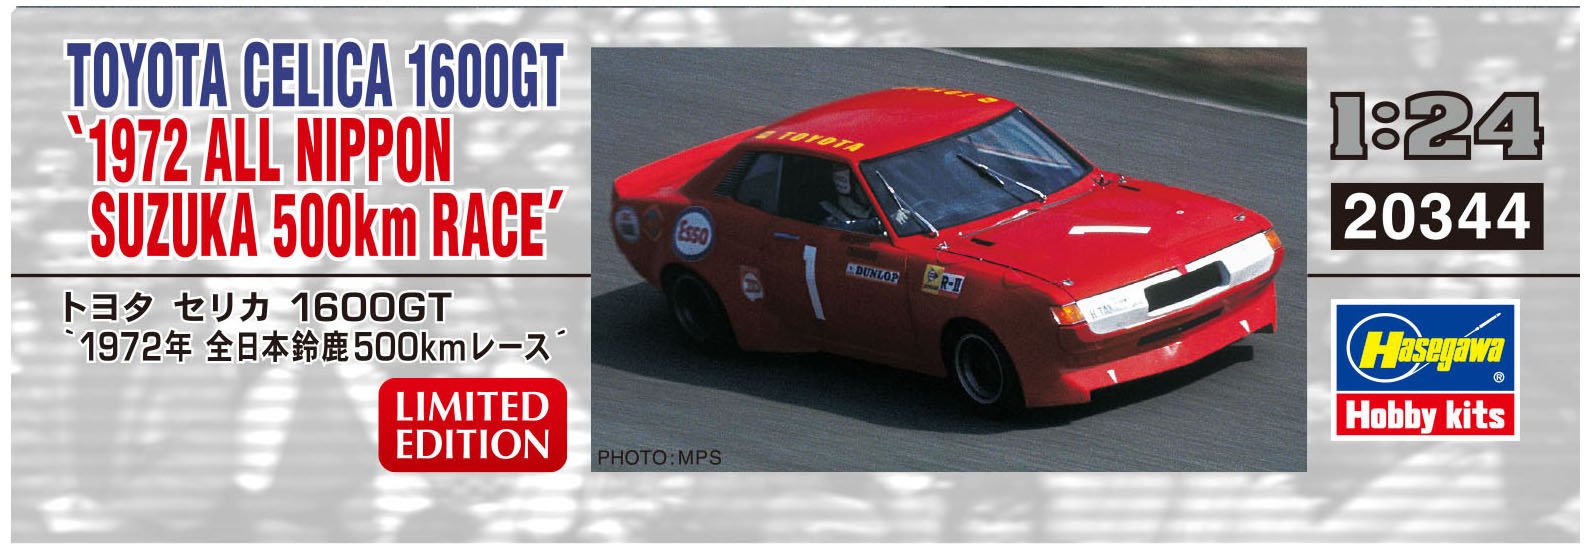 Hasegawa 20344 Toyota Celica 1600Gt 1972 All Nippon Suzuka 500km Race 1/24 Voiture classique